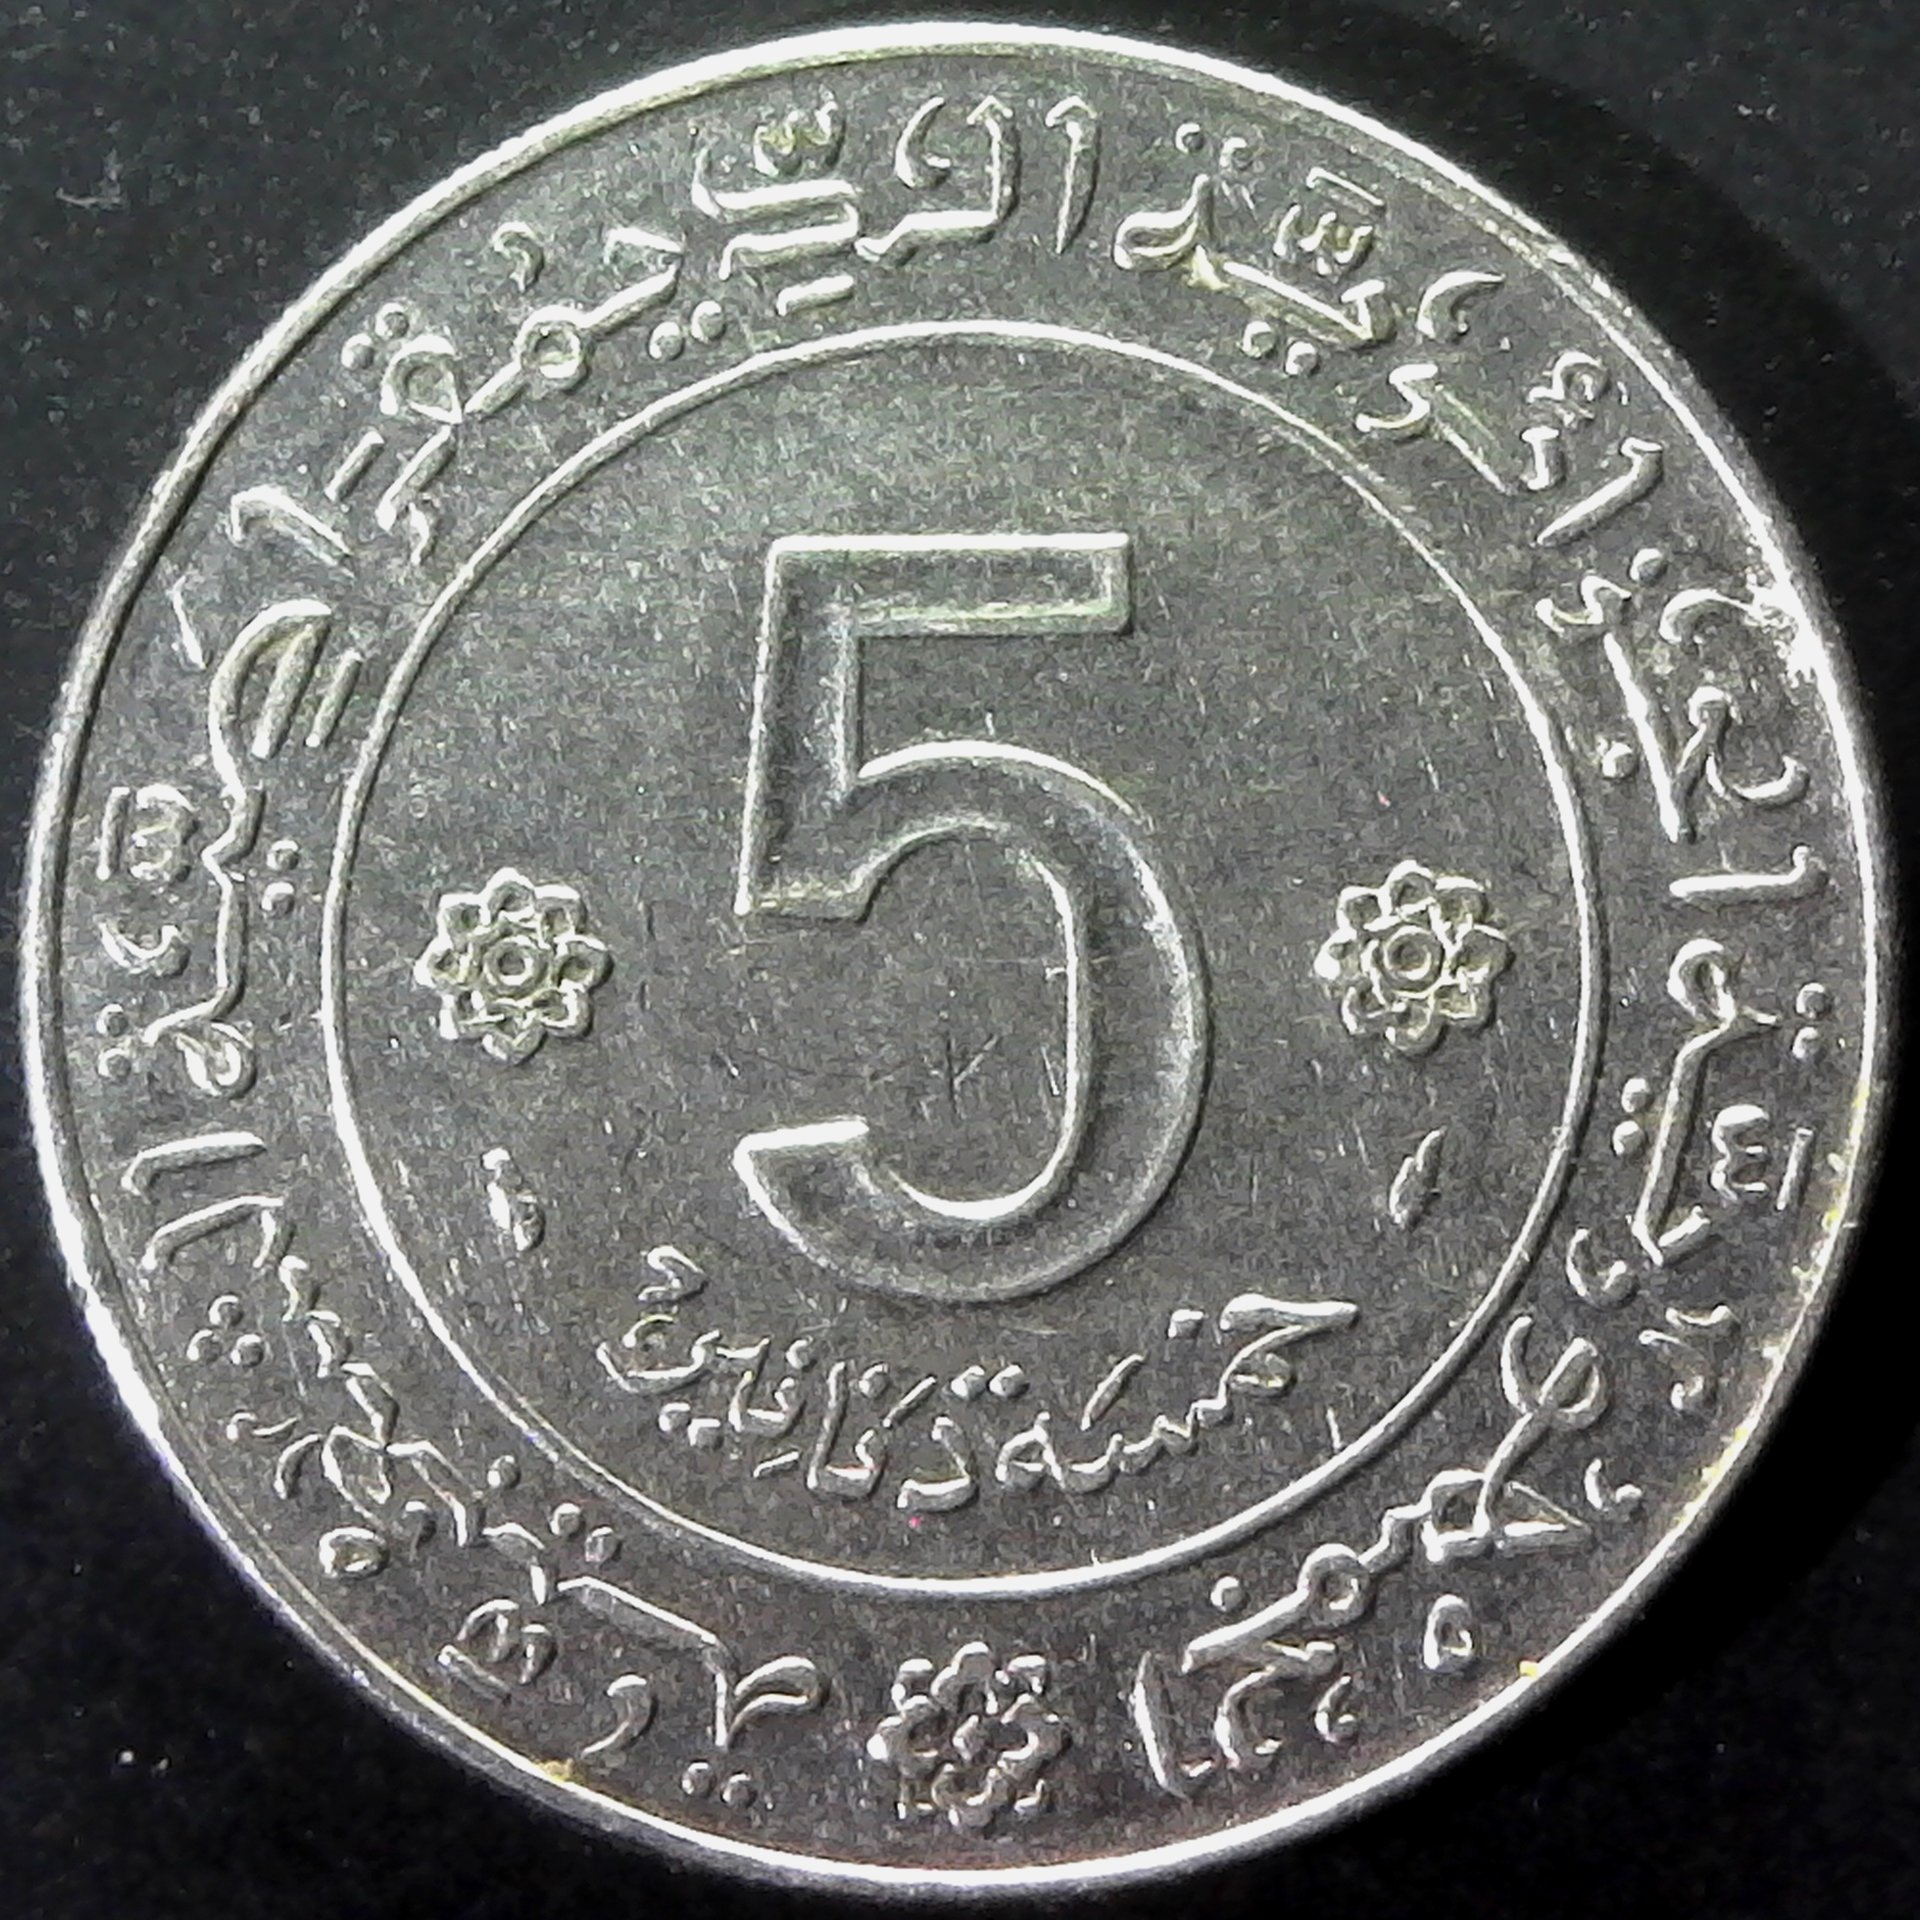 Algeria 5 Dinars 1974 rev.jpg